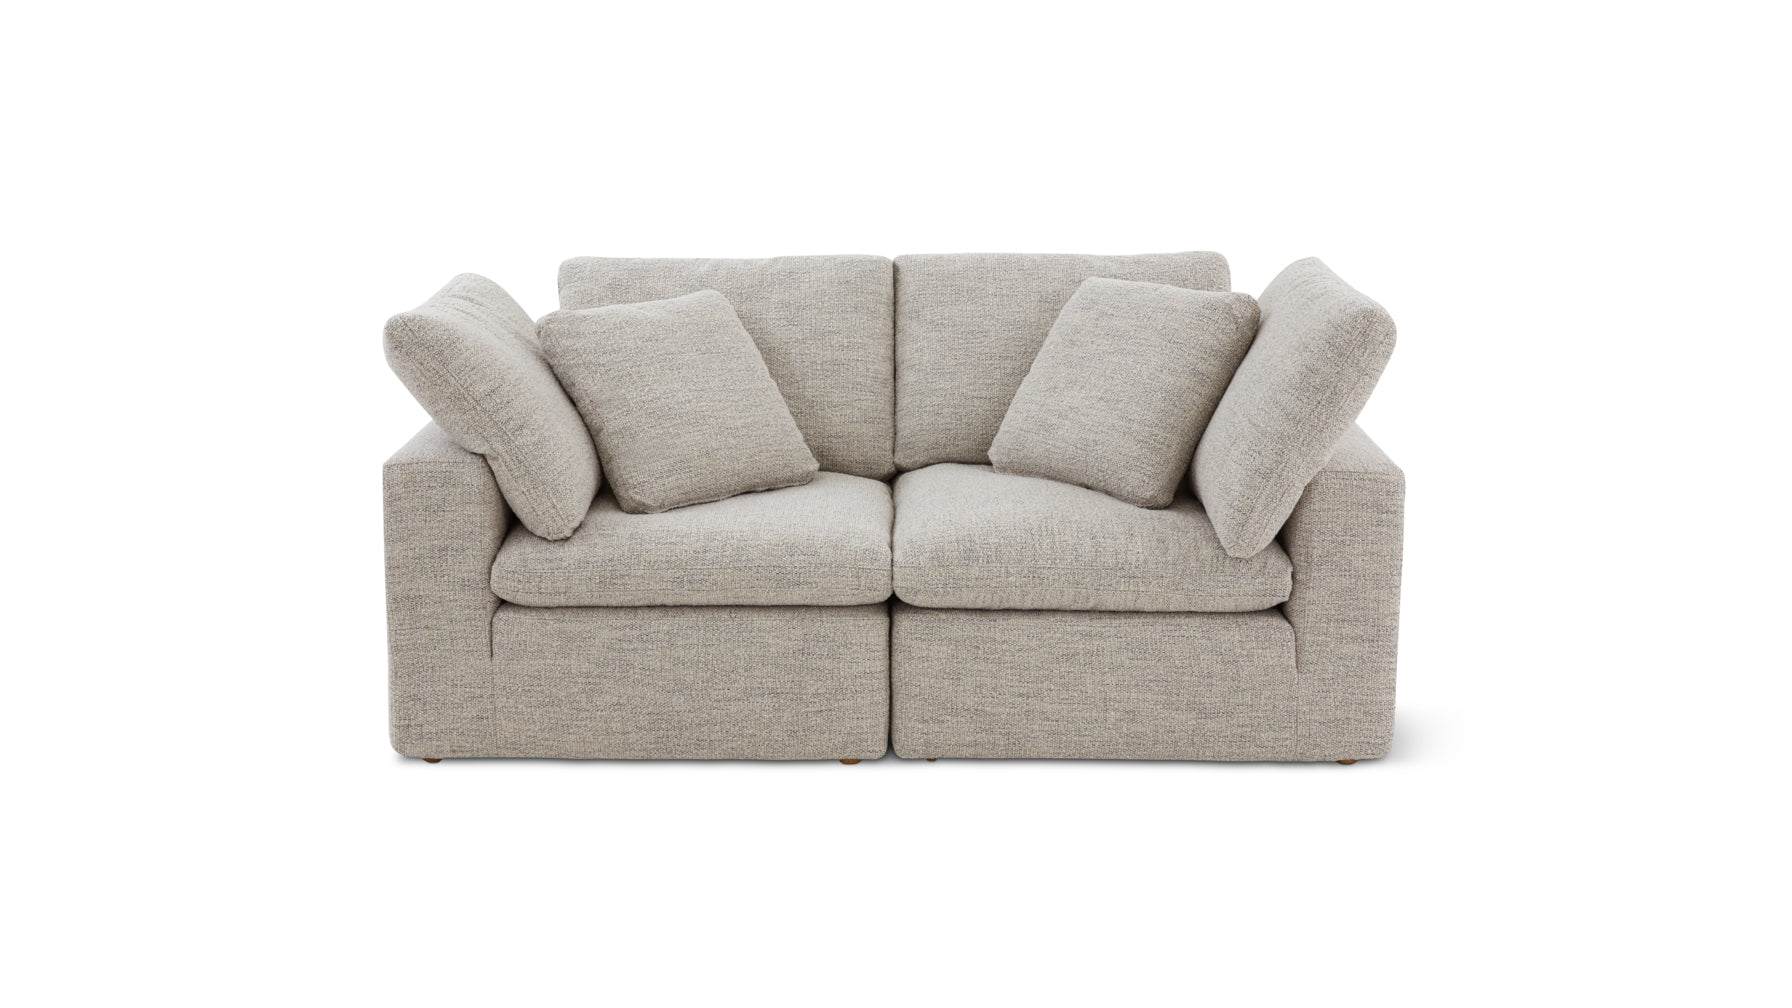 Movie Night™ 2-Piece Modular Sofa, Standard, Oatmeal - Image 1